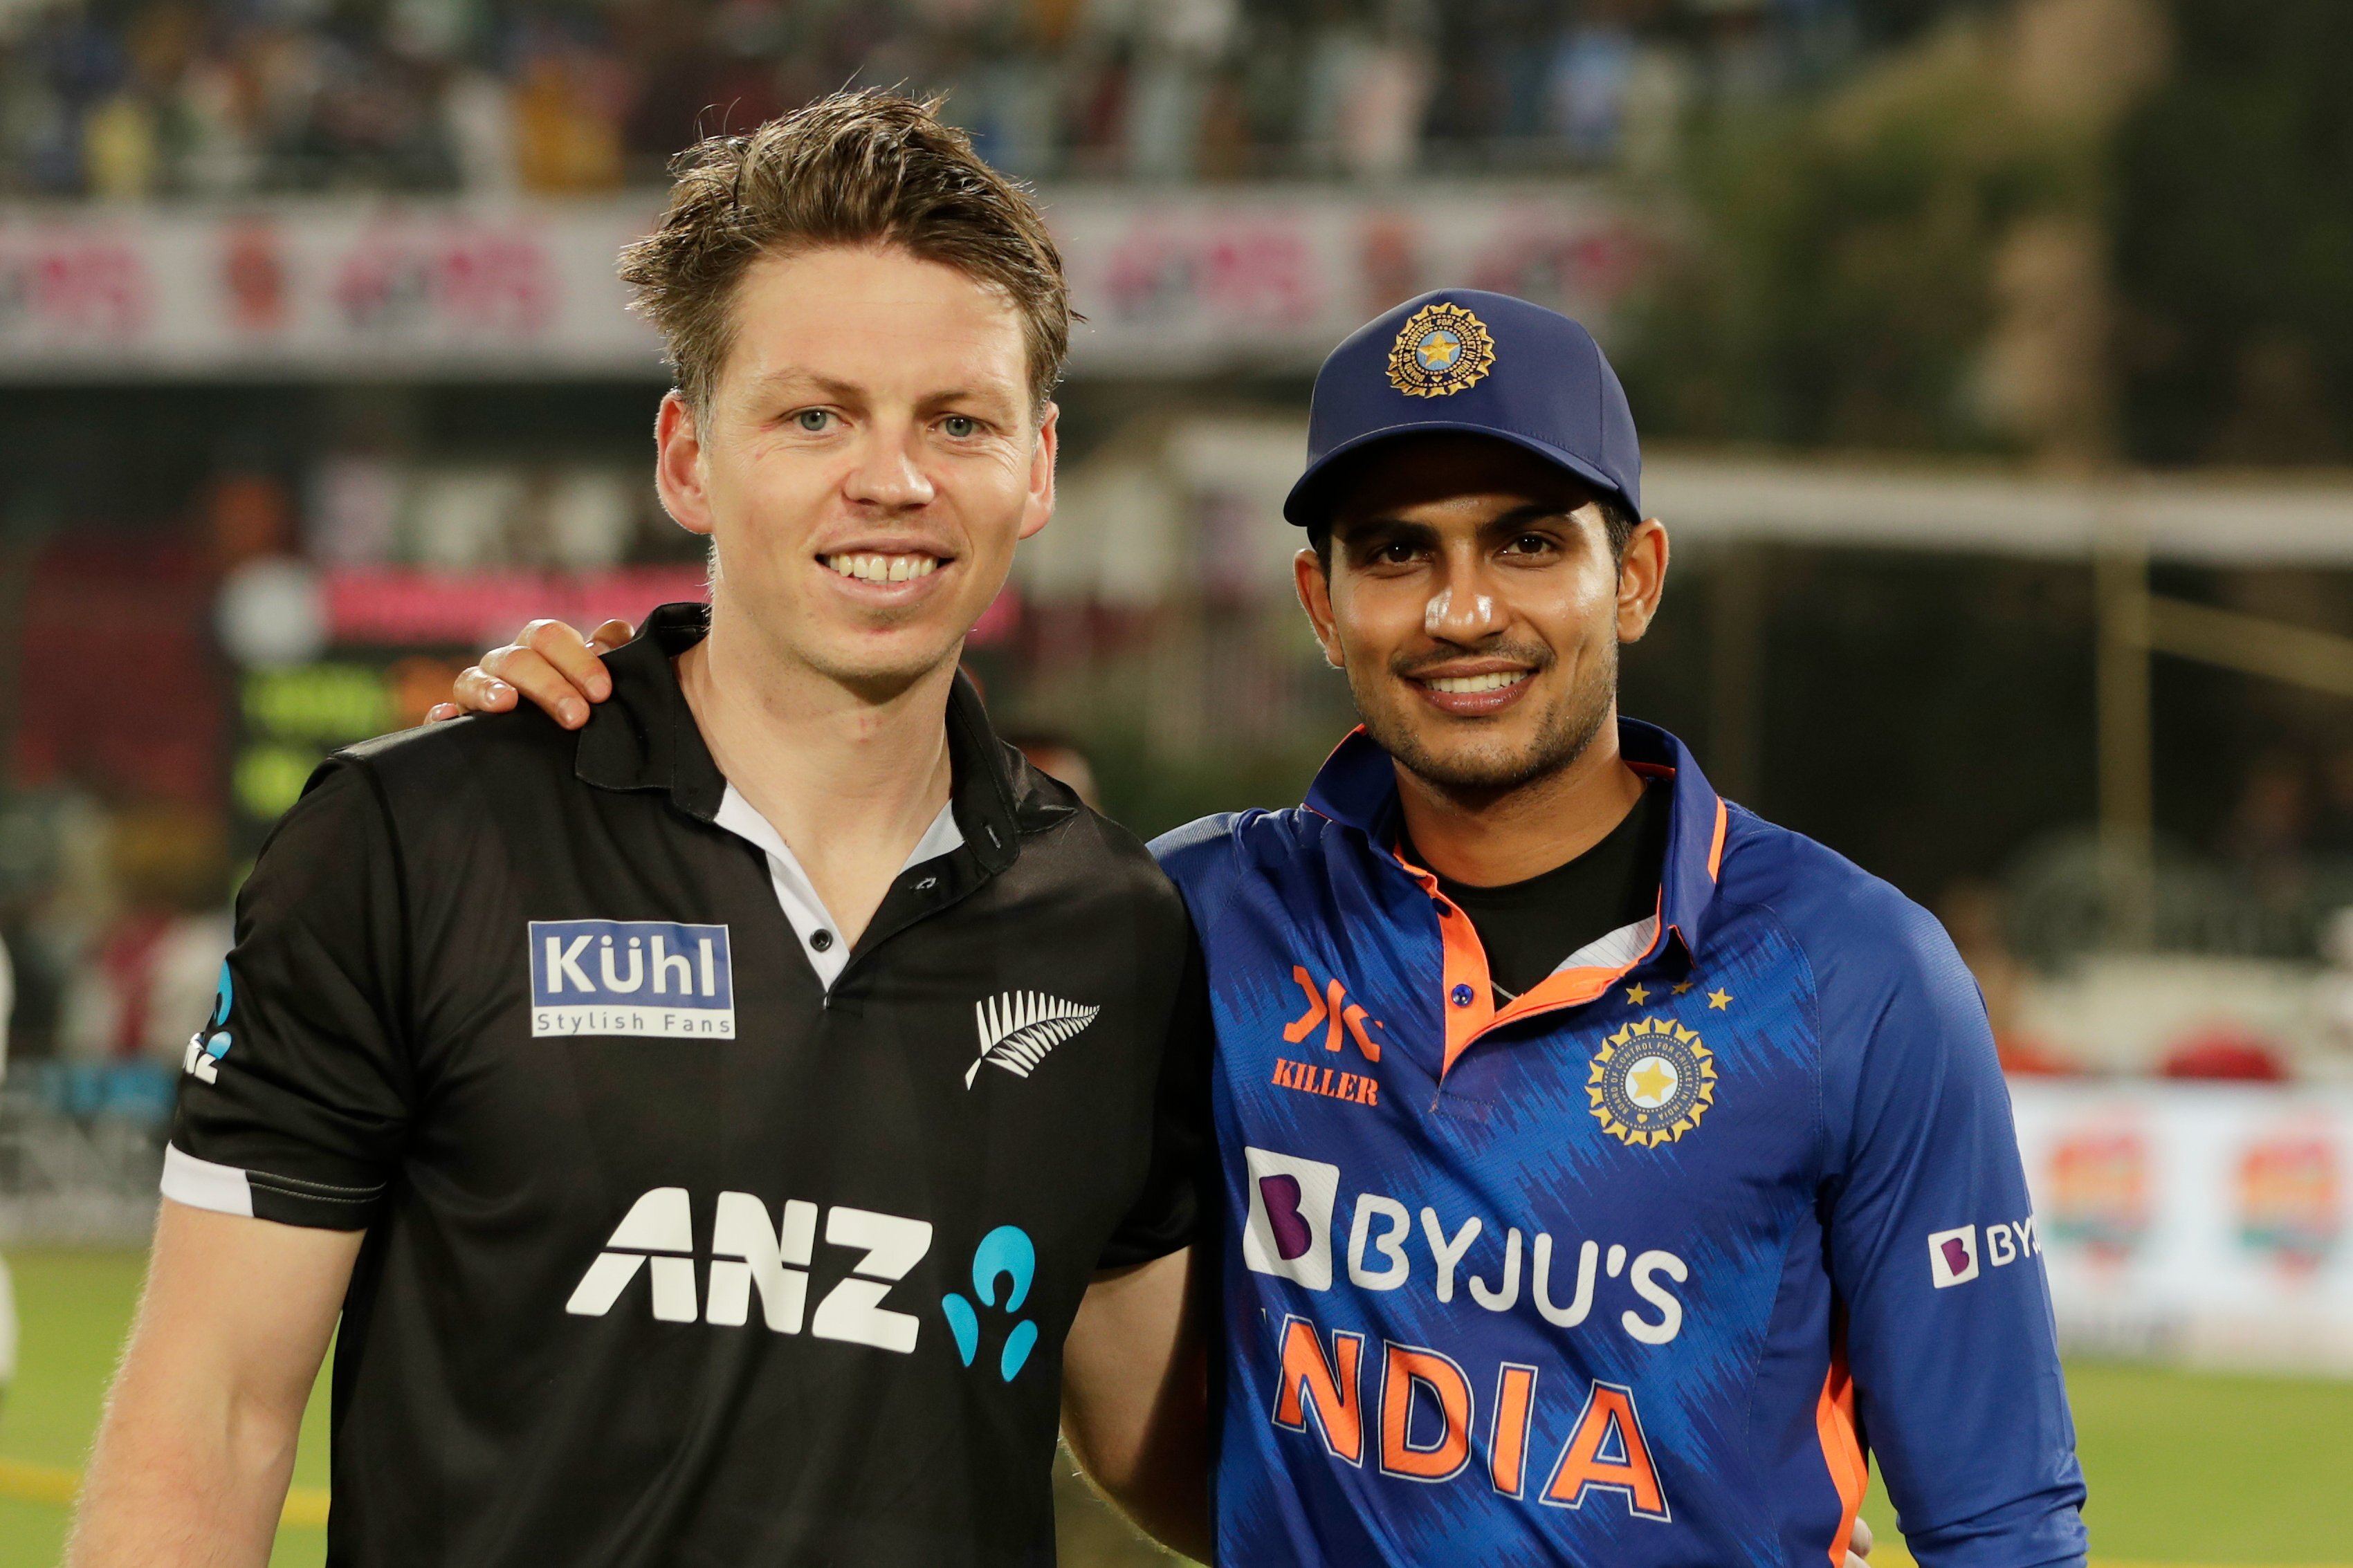 IND vs NZ ODI Series Updates